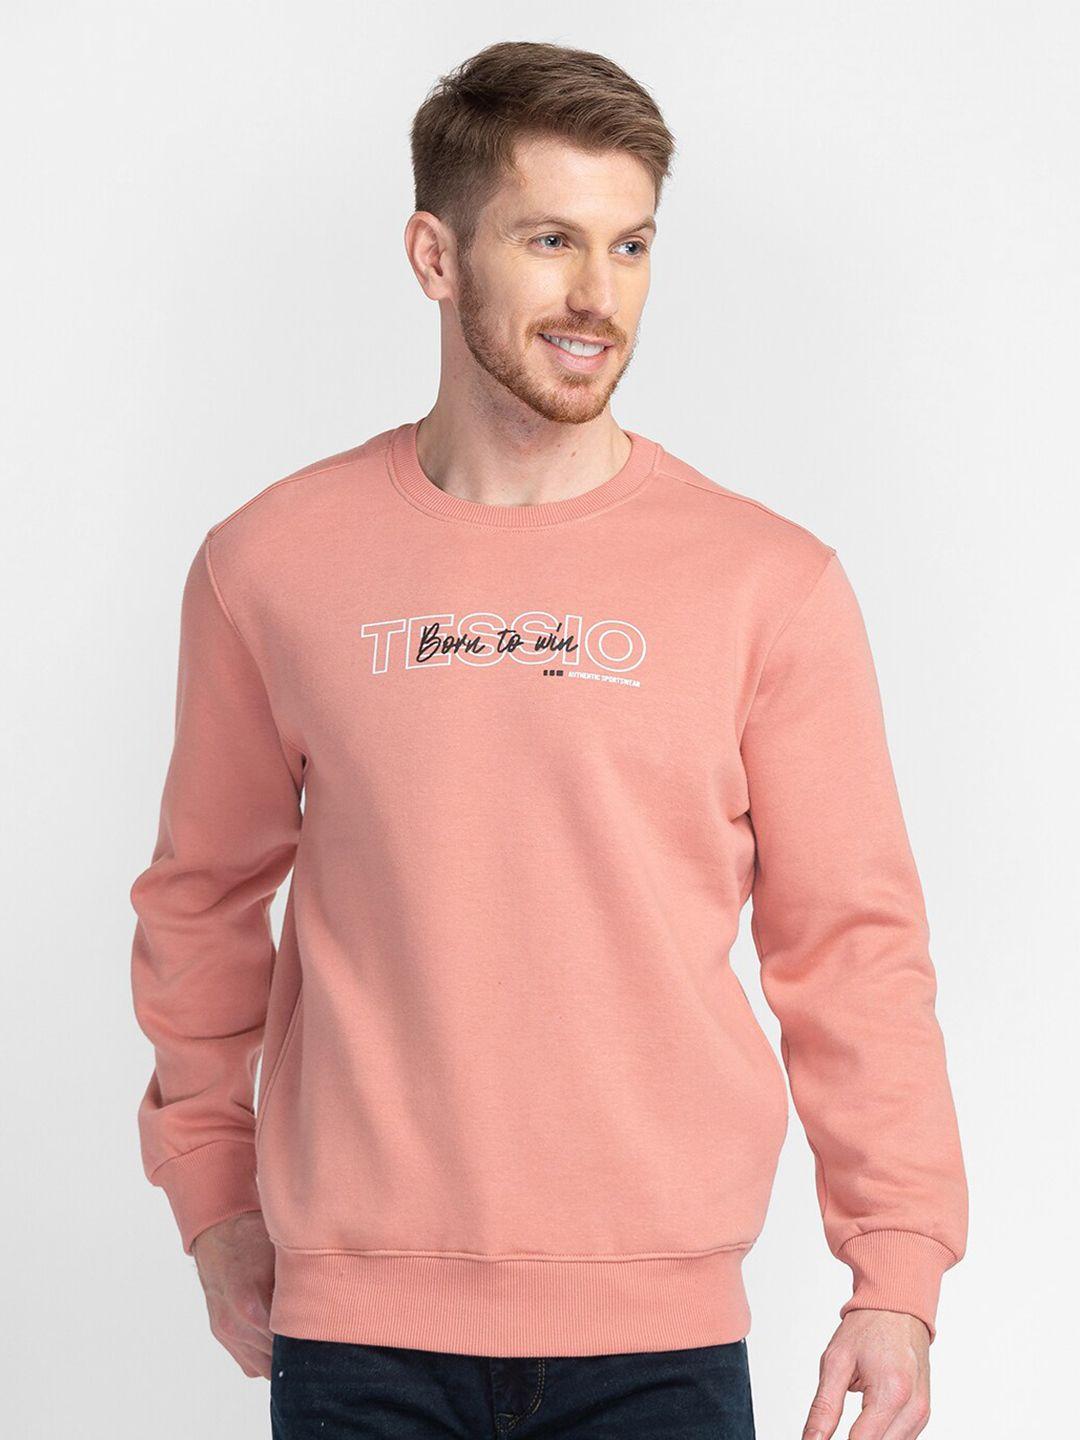 tessio men peach-coloured sweatshirt